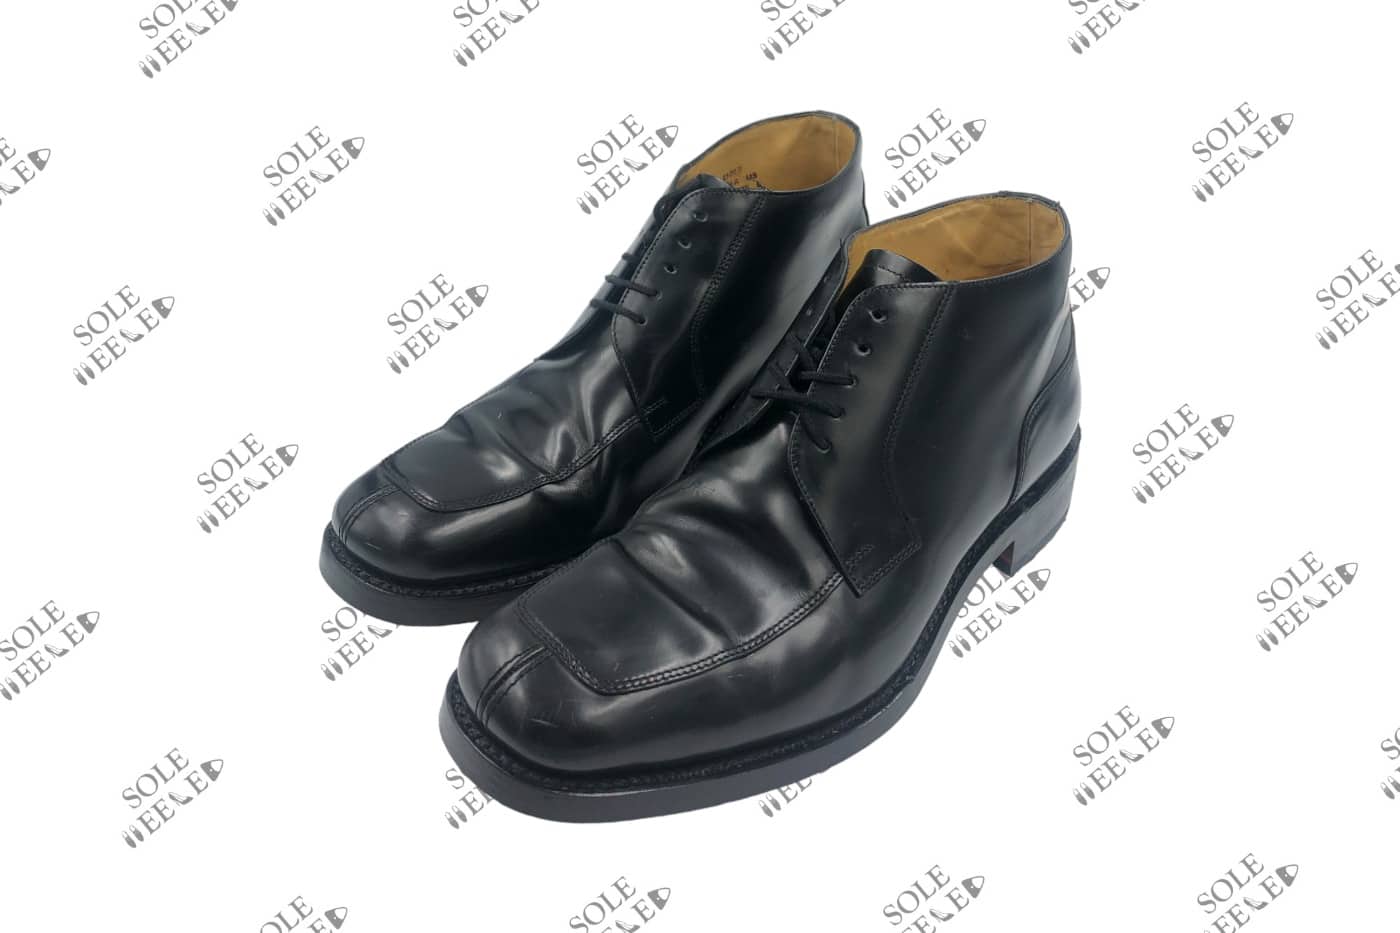 Loake Shoe Leather Resole